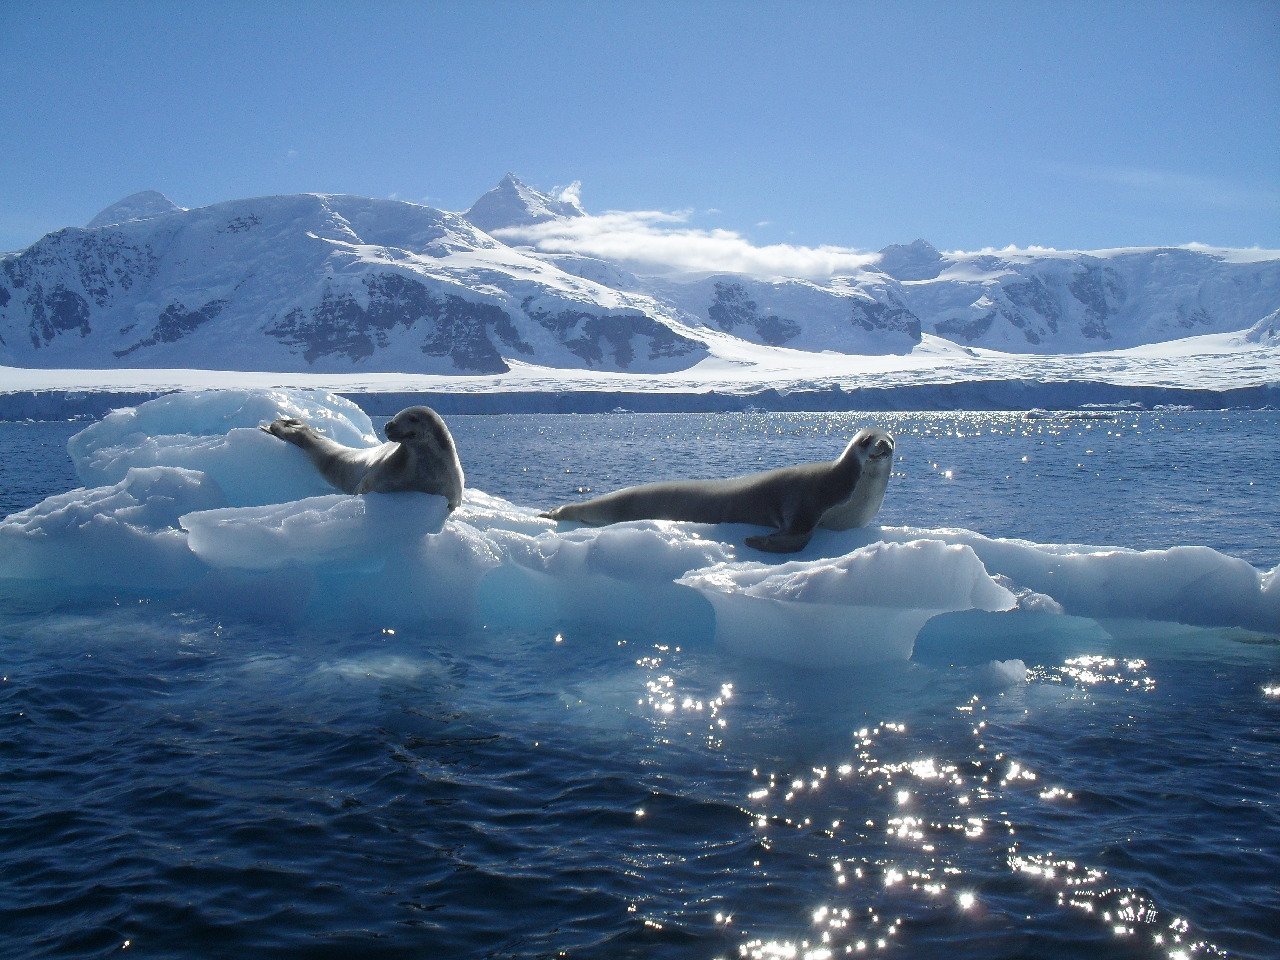 Южный океан г. Южный Ледовитый океан. Море Скоша моря Южного океана. Морж Северного Ледовитого океана. Южный берег Северного Ледовитого океана.